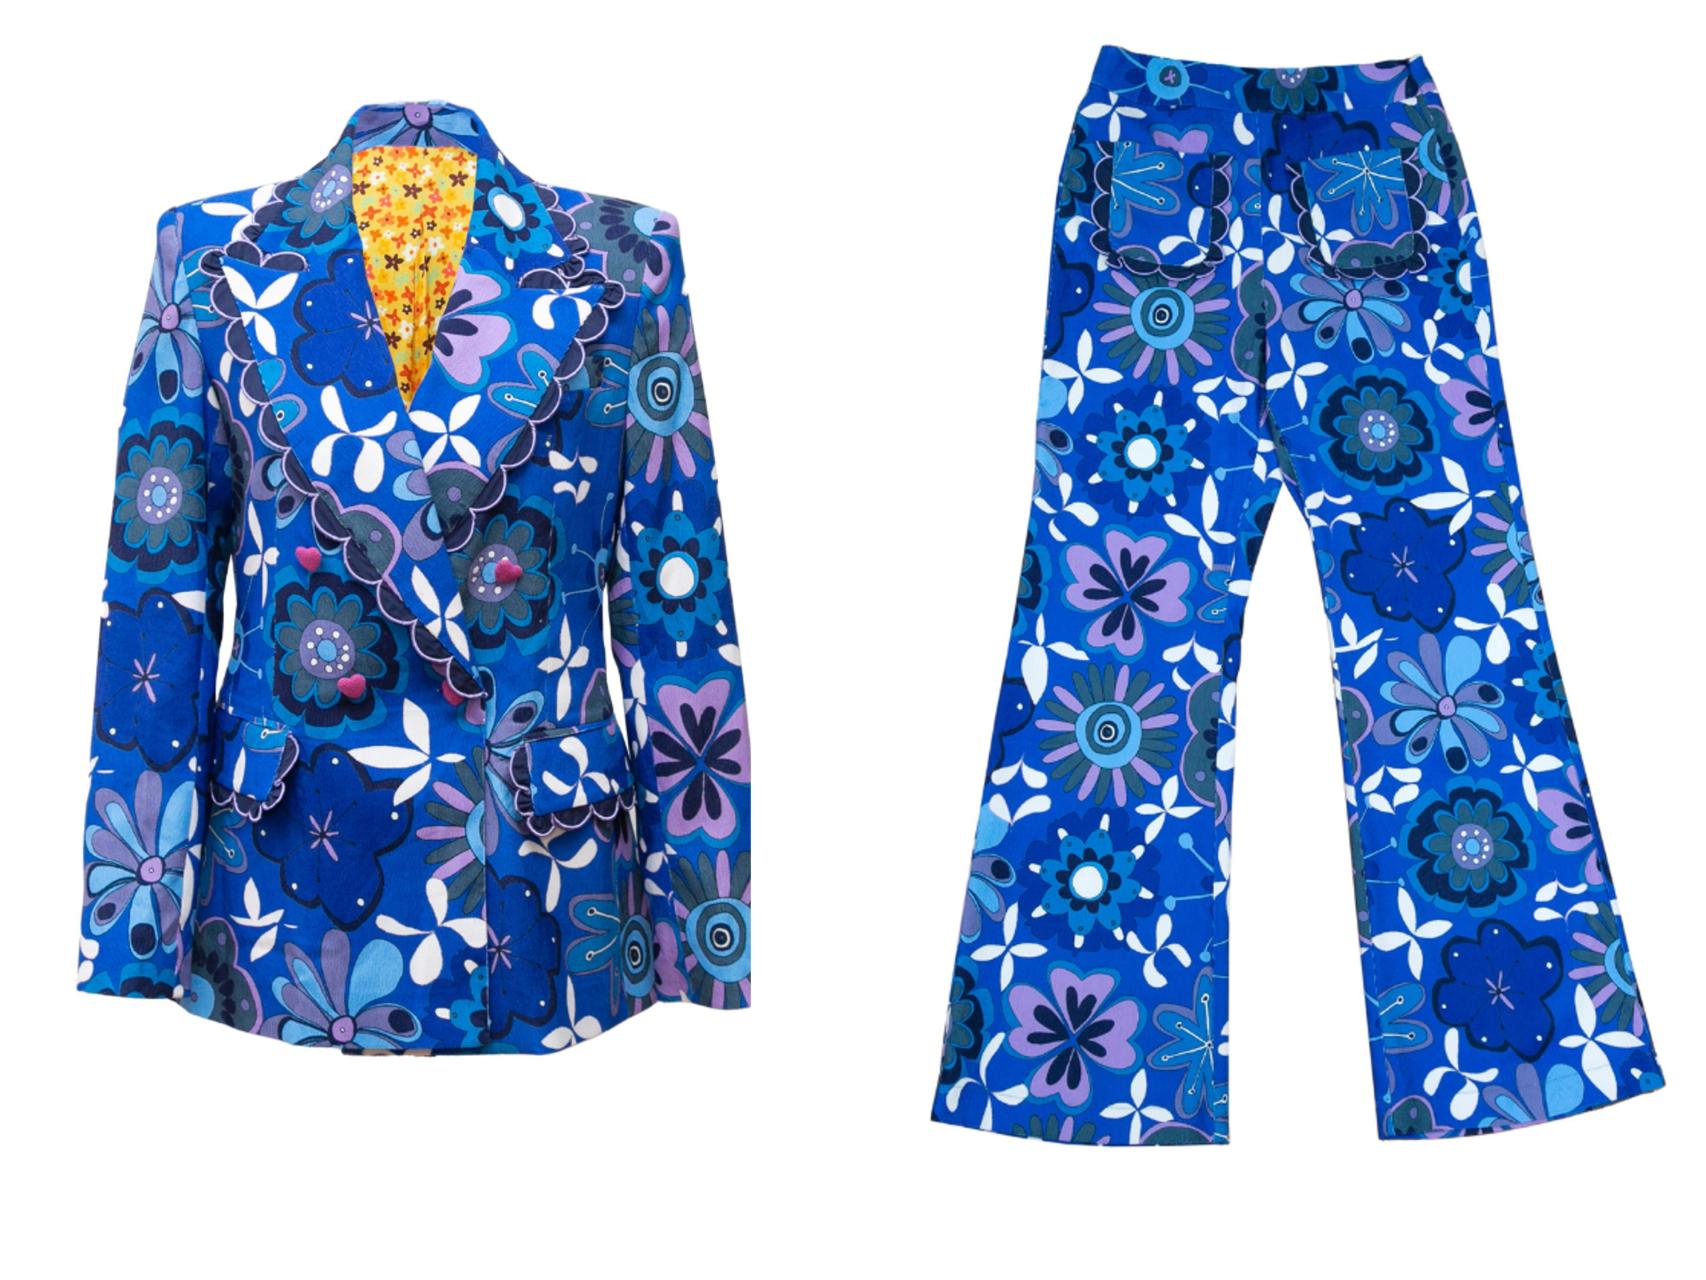 Izquierda: Ben jacket blue, 320,84 euros / Derecha: Avron Trousers blue, 172,76 euros.